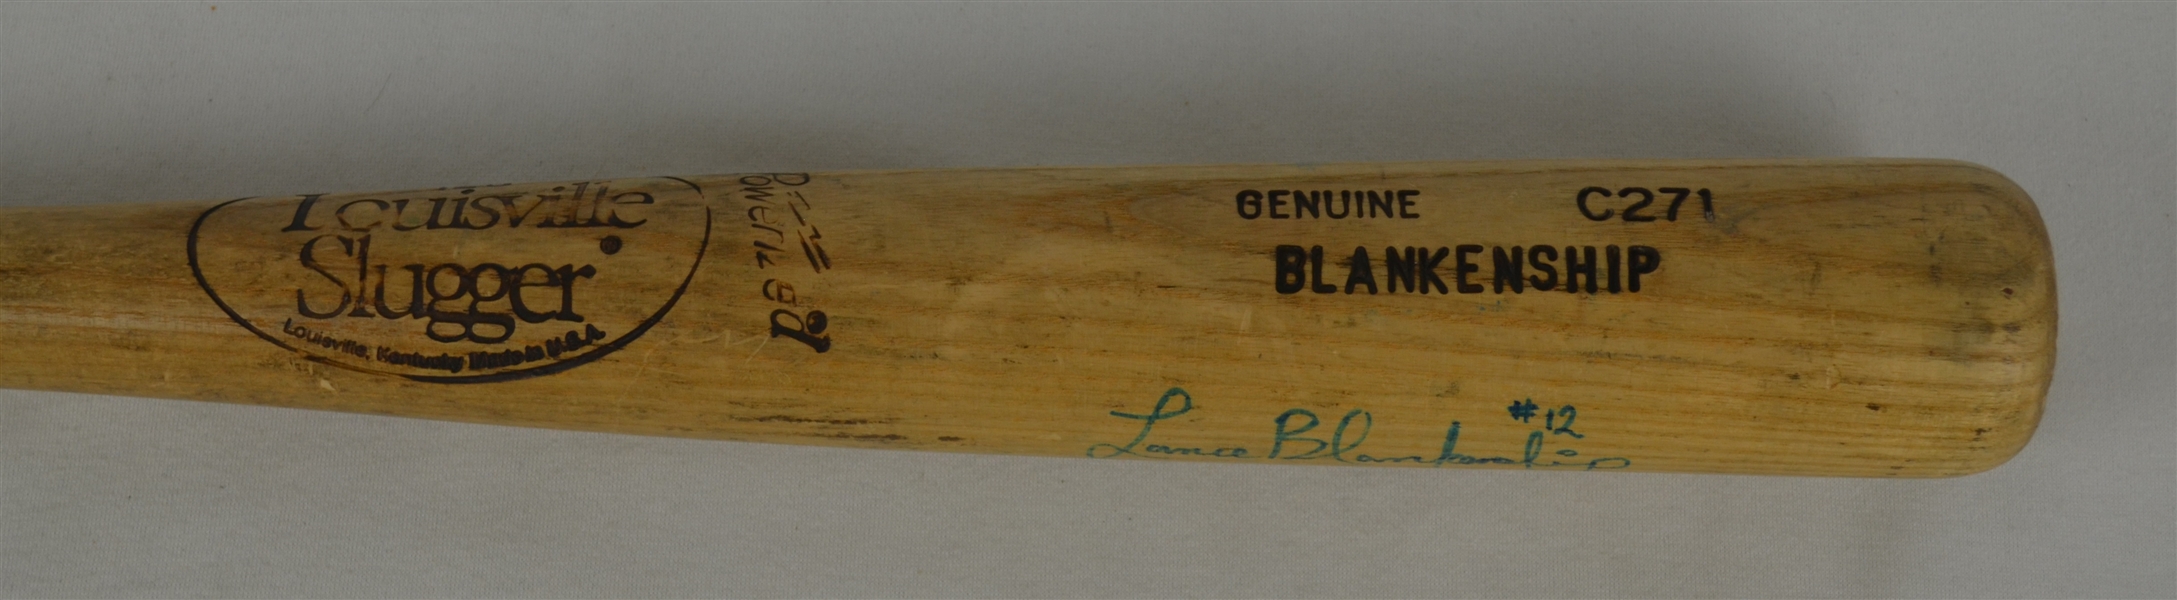 Lance Blankenship Professional Model Bat w/Heavy Use